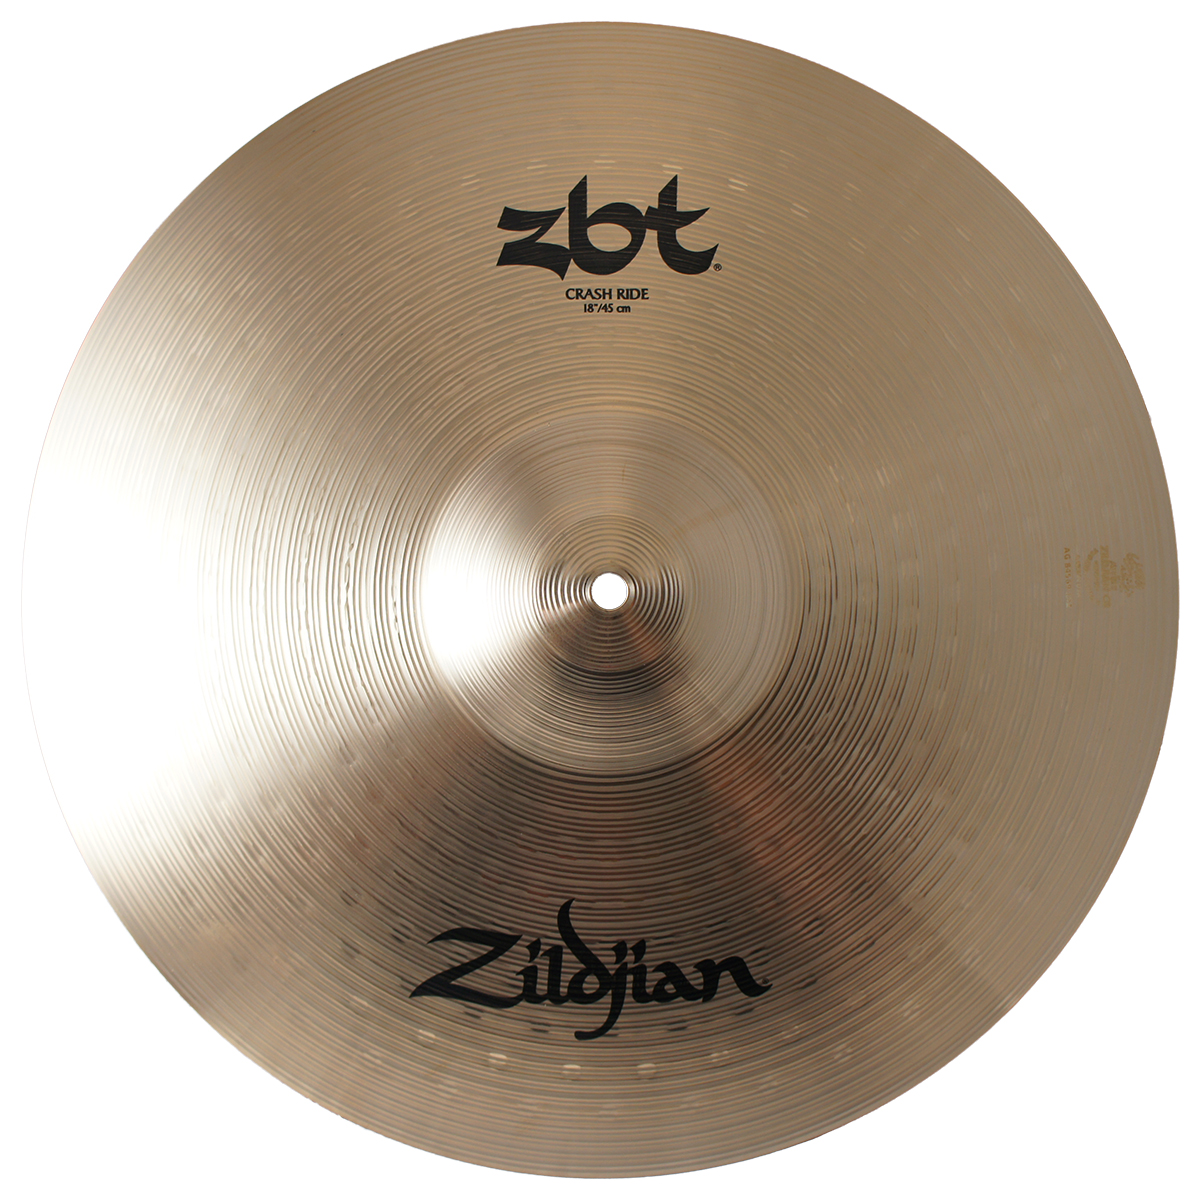 Zildjian 18" Zbt Crash Ride Type Cymbal w/ Large Bell size ZBT18CR